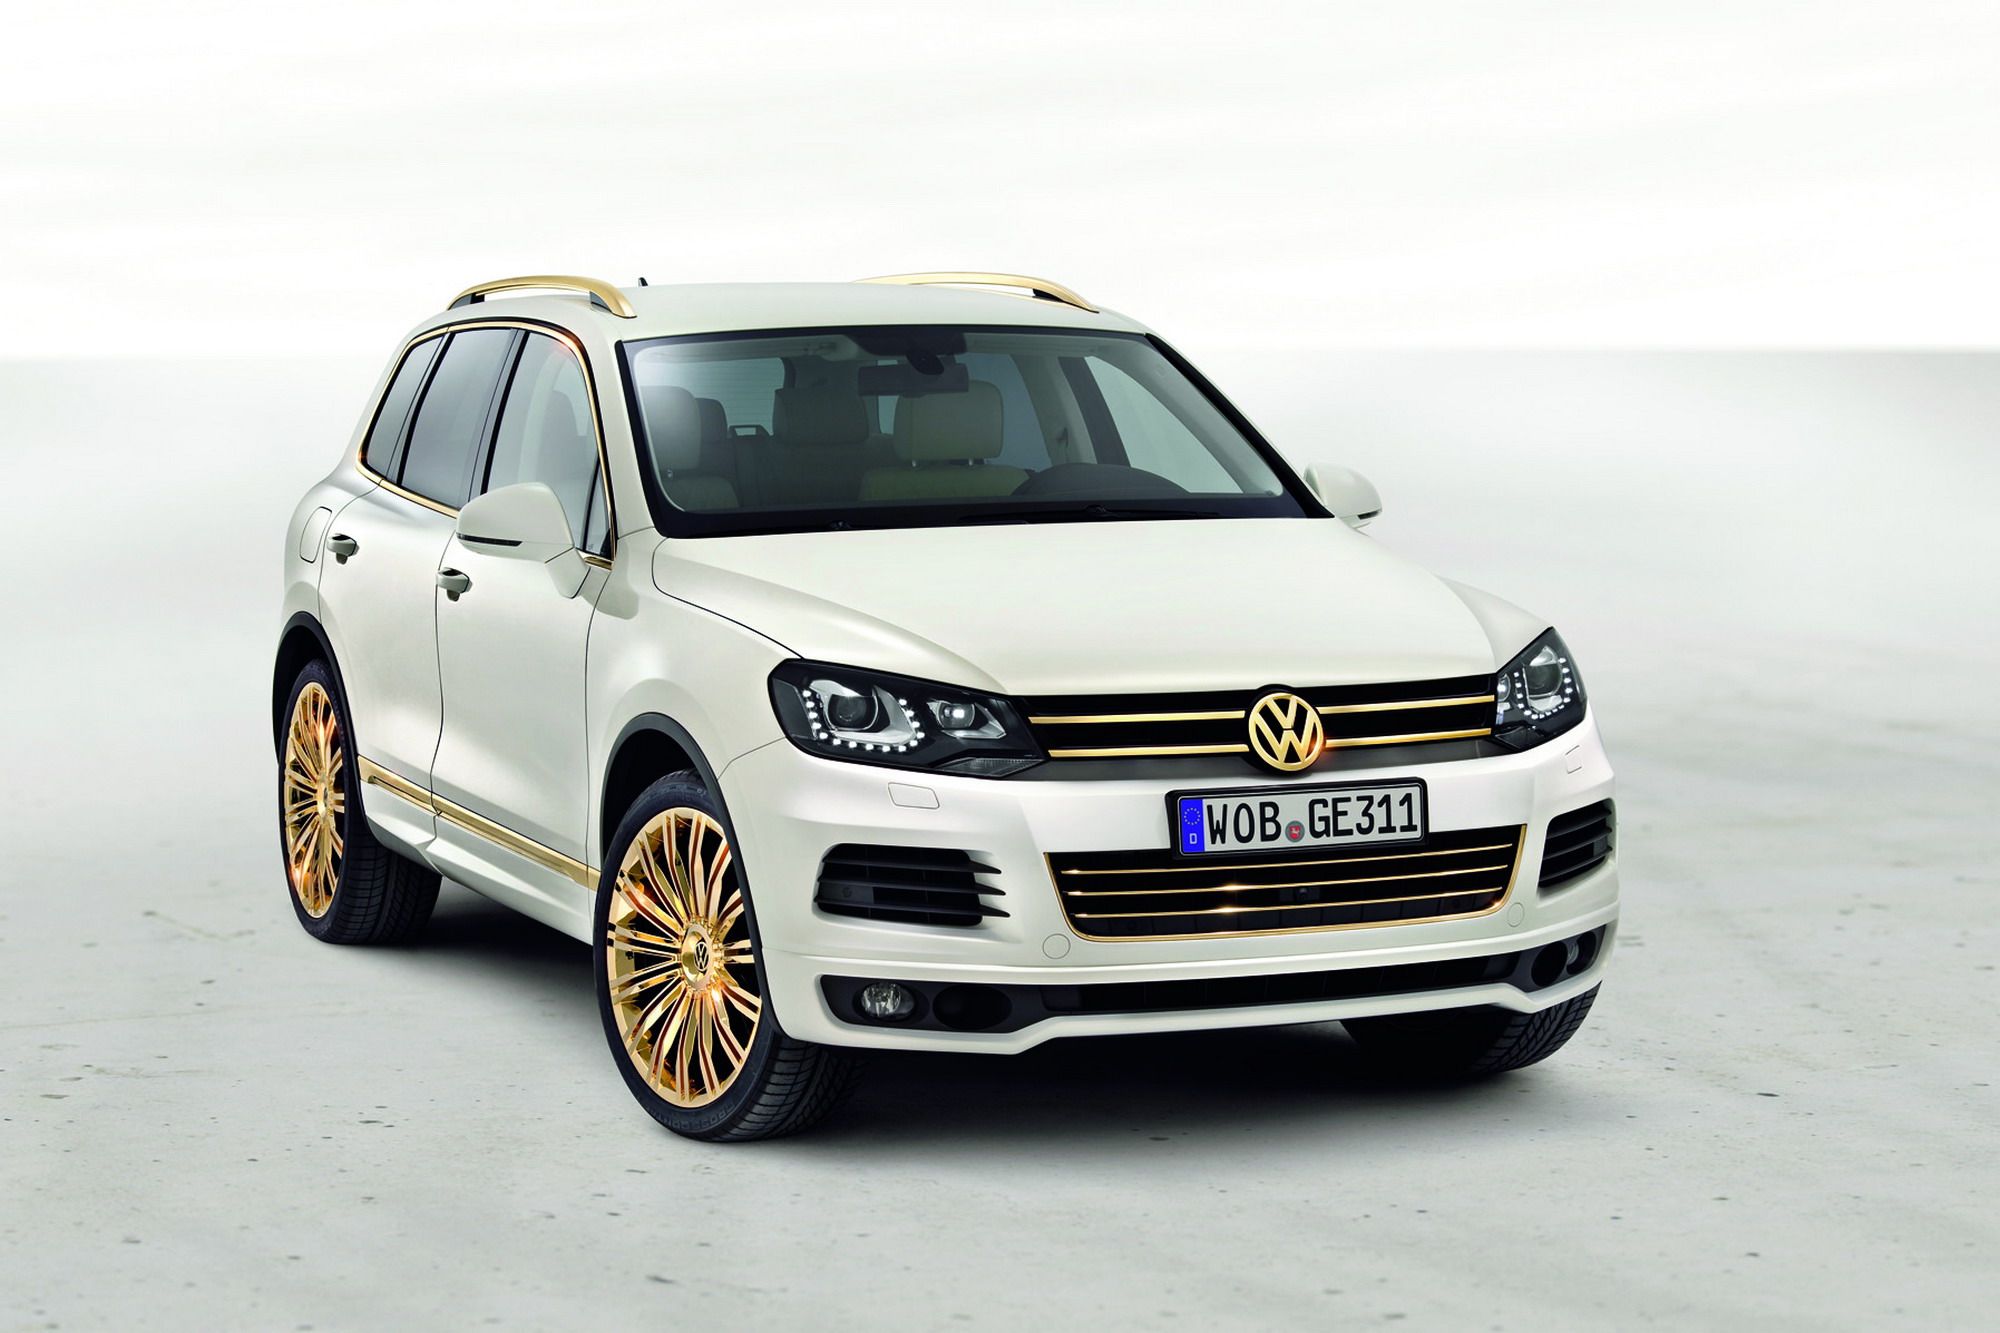 2011 Volkswagen Touareg Gold Edition Study